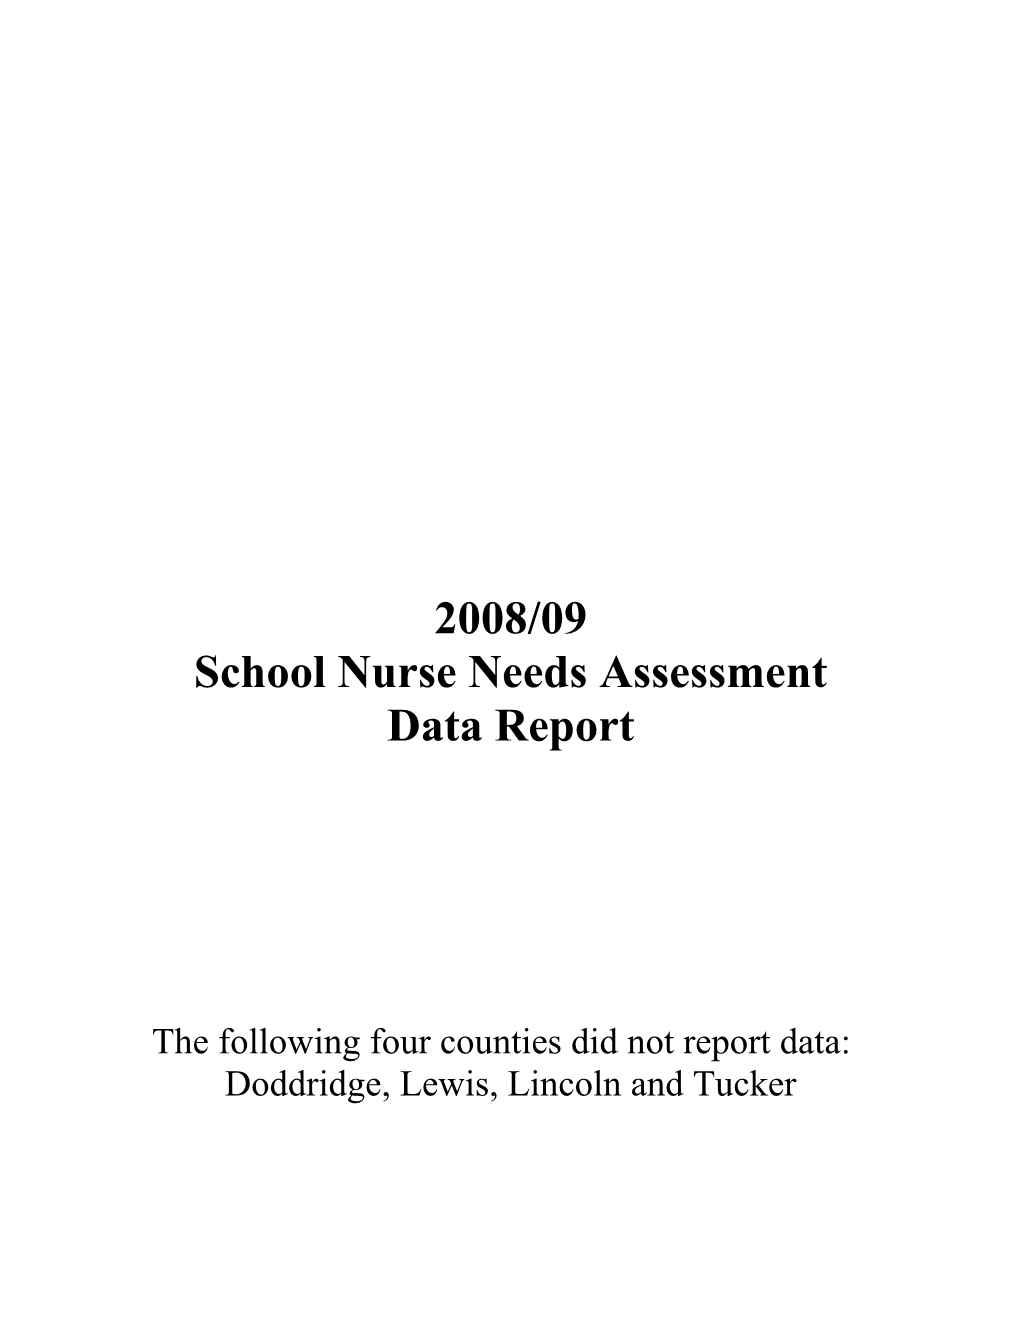 School Nurse Needs Assessment